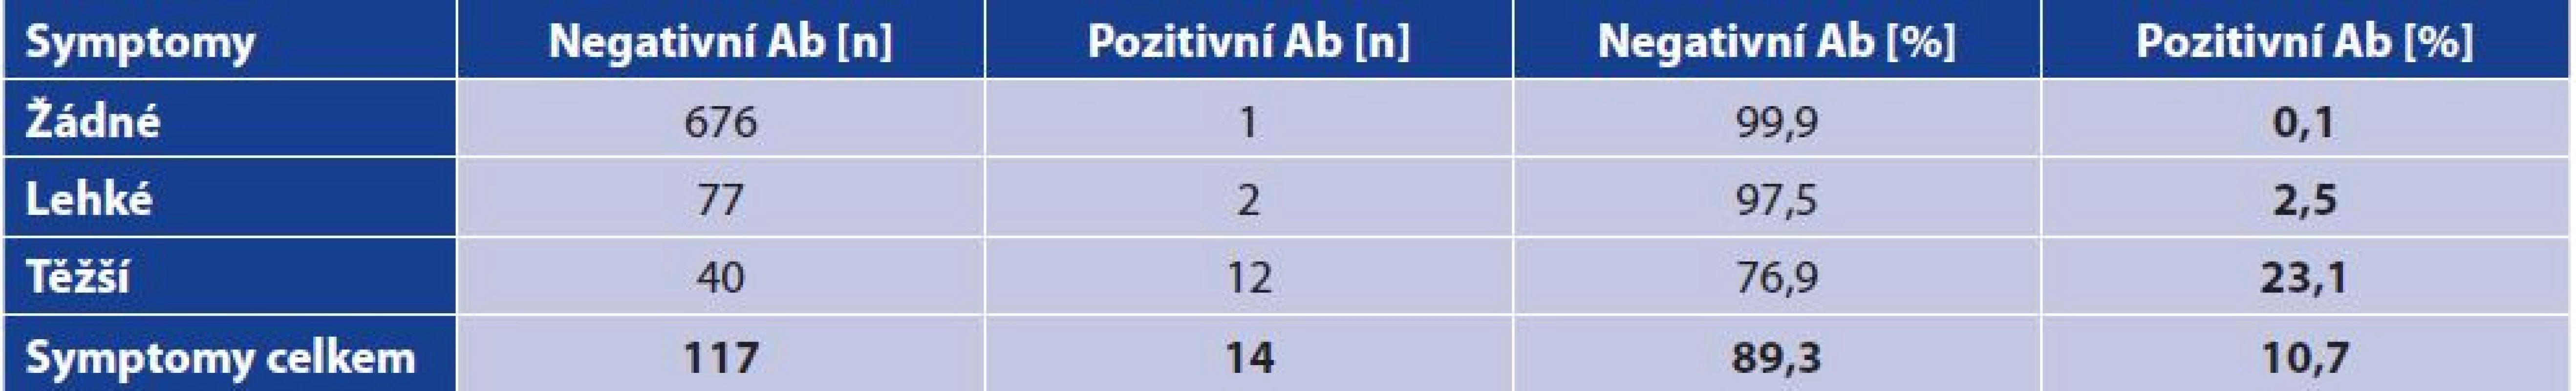 Vztah mezi symptomy a pozitivitou anti-SARS-CoV-2 protilátek<br>
Table 4. Correlation between symptoms and the positivity for anti-SARS-CoV-2 antibodies